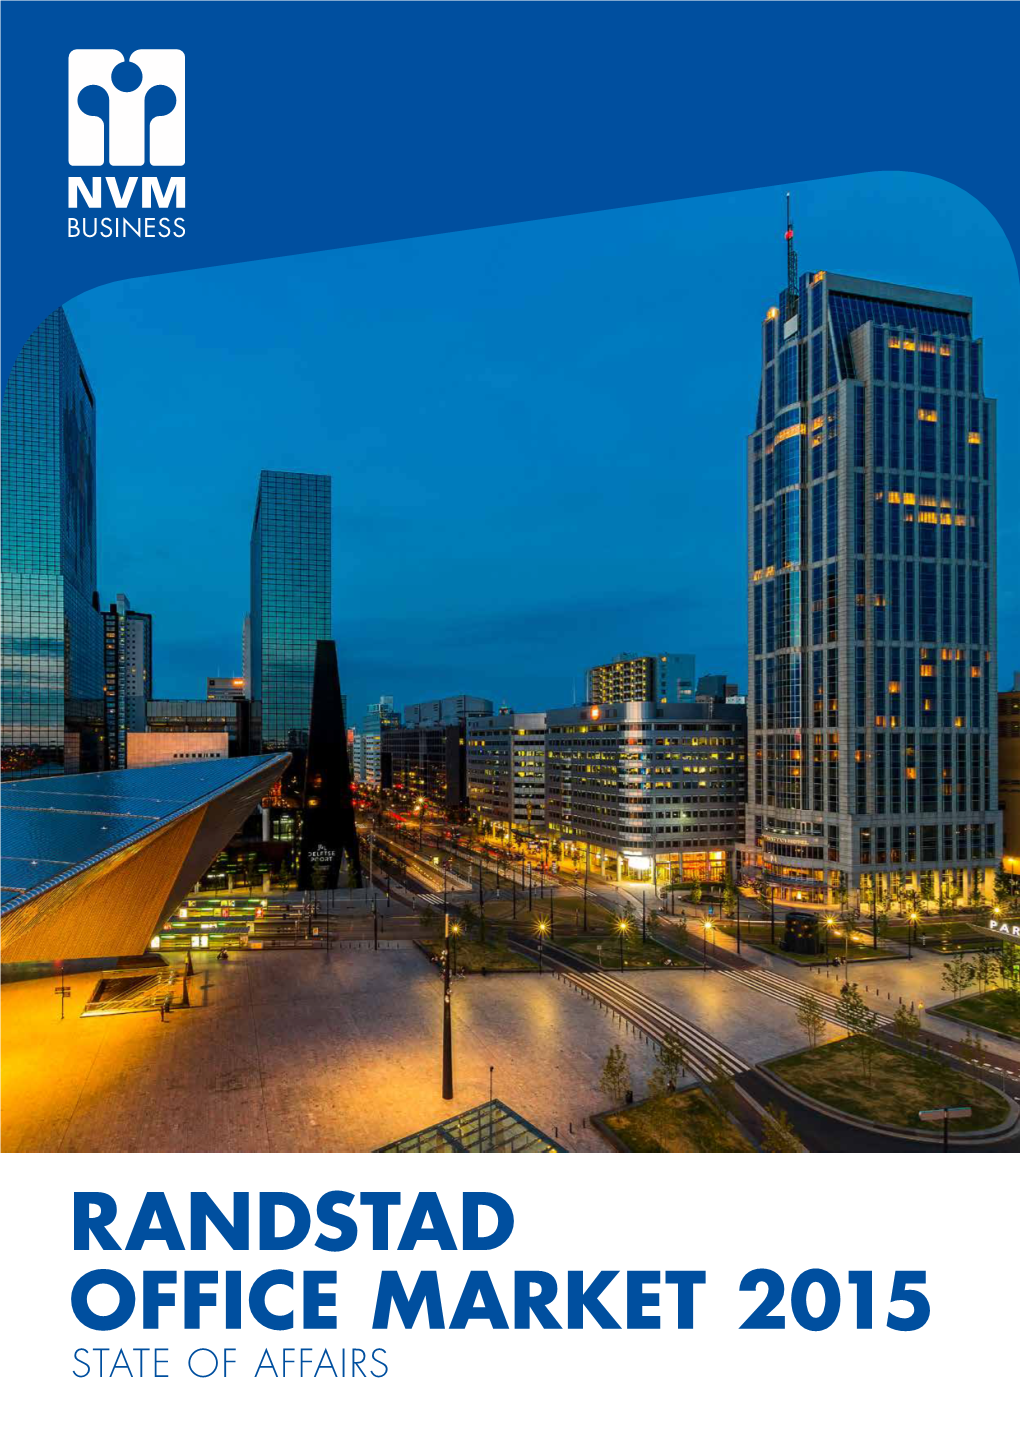 Randstad Office Market 2015 State of Affairs Amsterdam Region